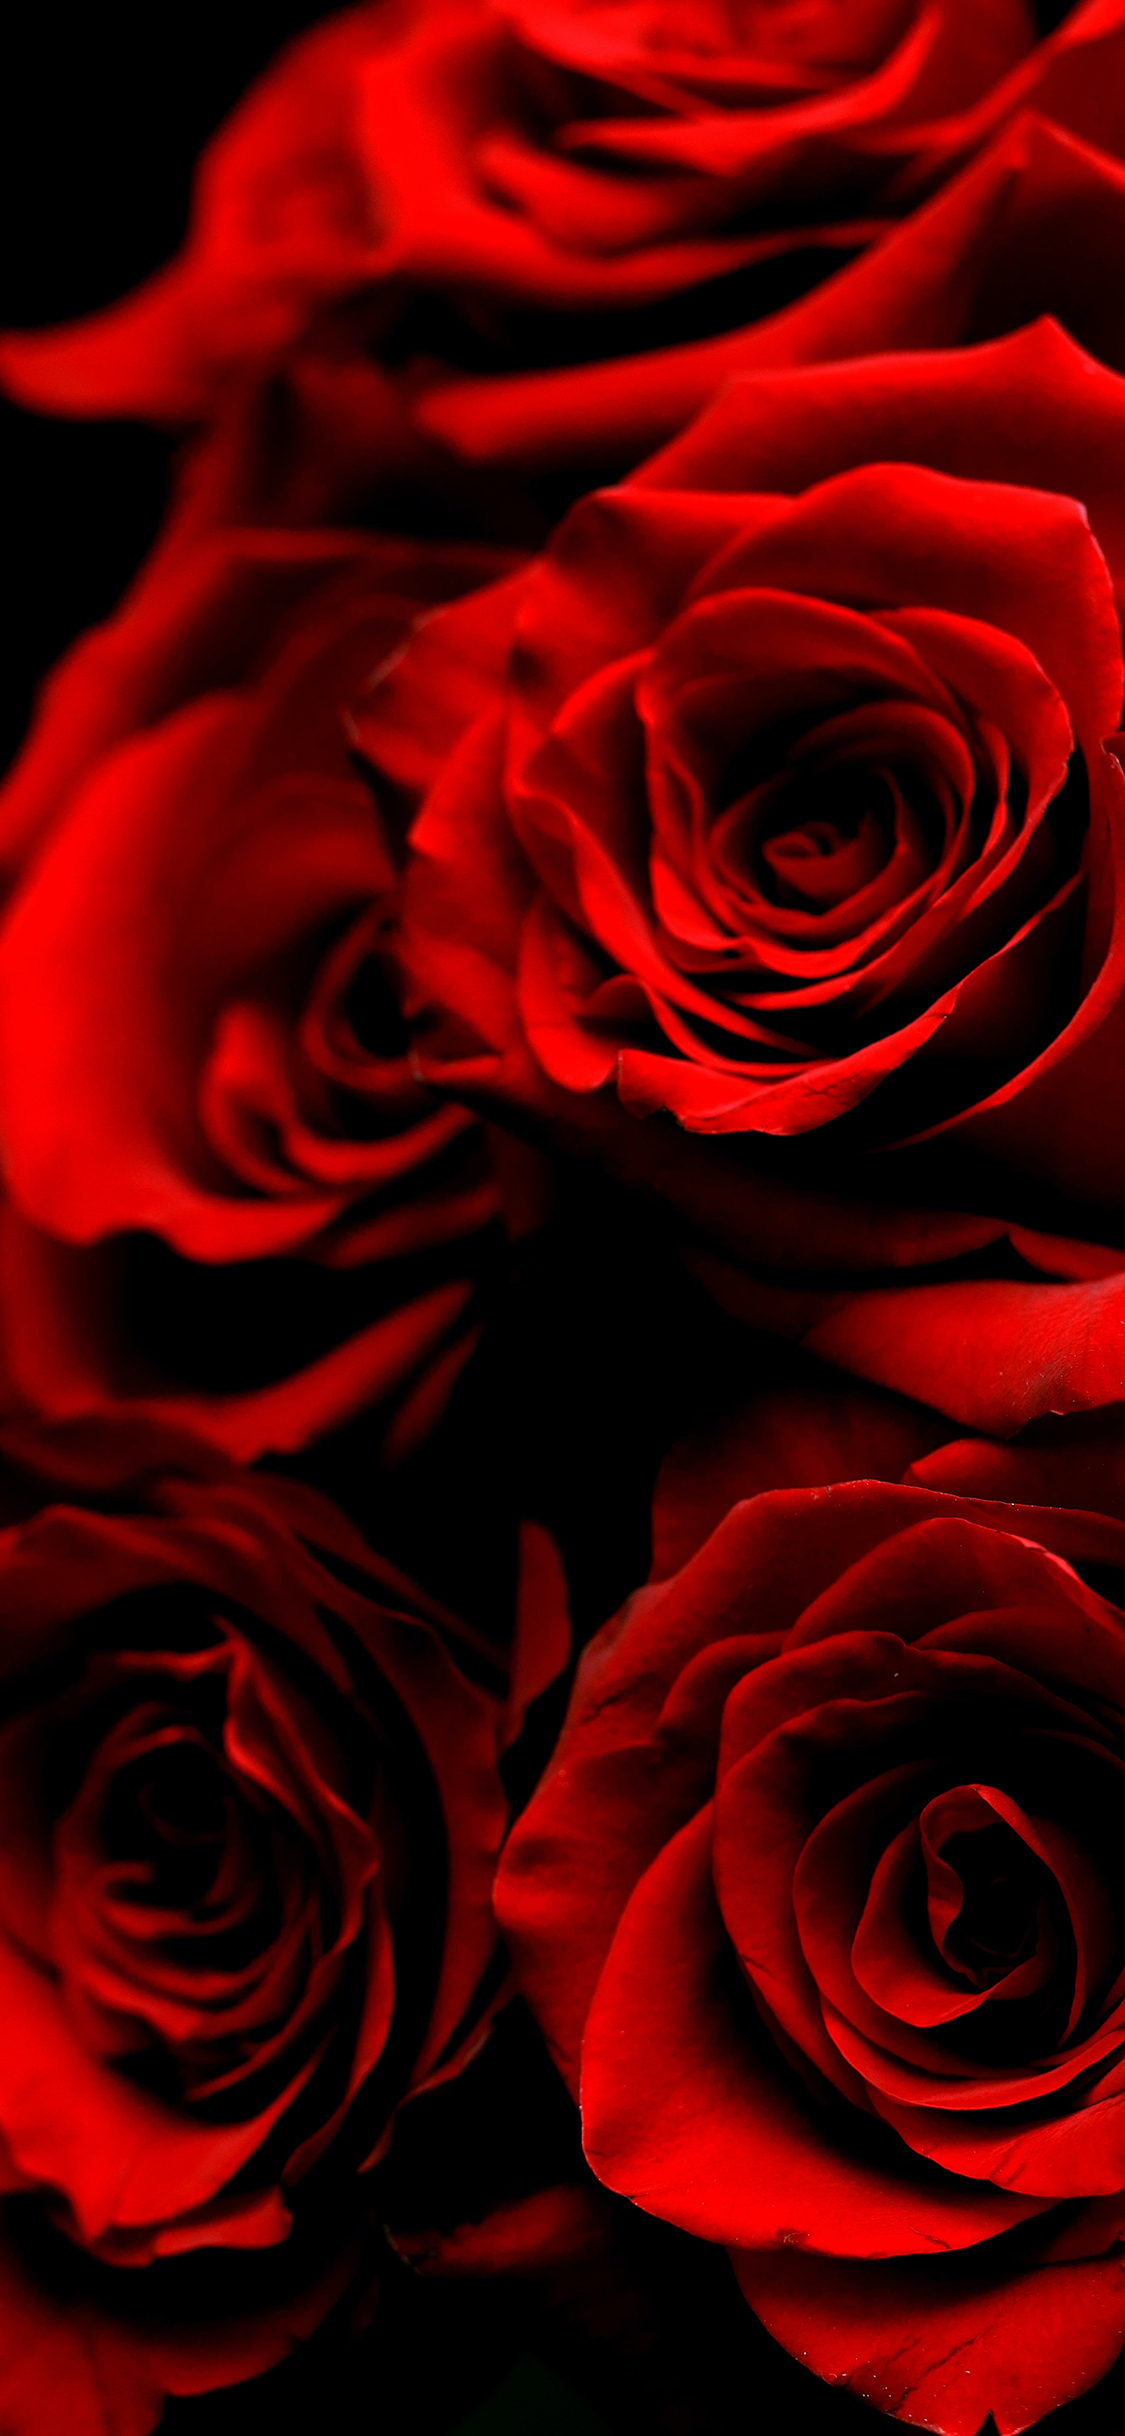 Red Rose iPhone 7 Wallpaper